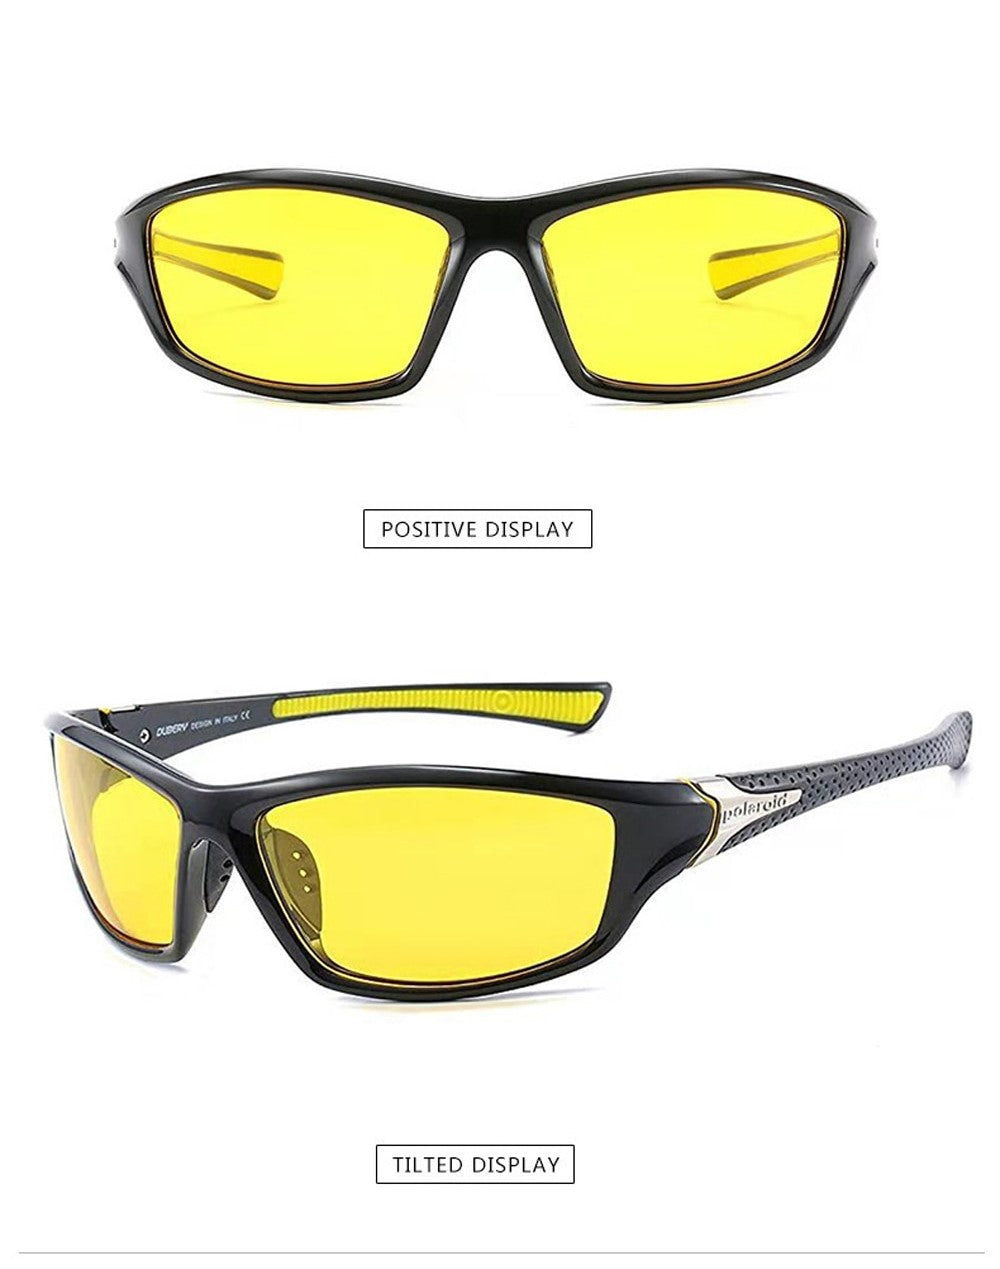 Terminator 2 - Arnie T800 Glasses - Polarized Sunglasses -  Classic Design & Night Vision - 1990's Movie Replica - Protection UV 400 - Golden Class Movies LTD